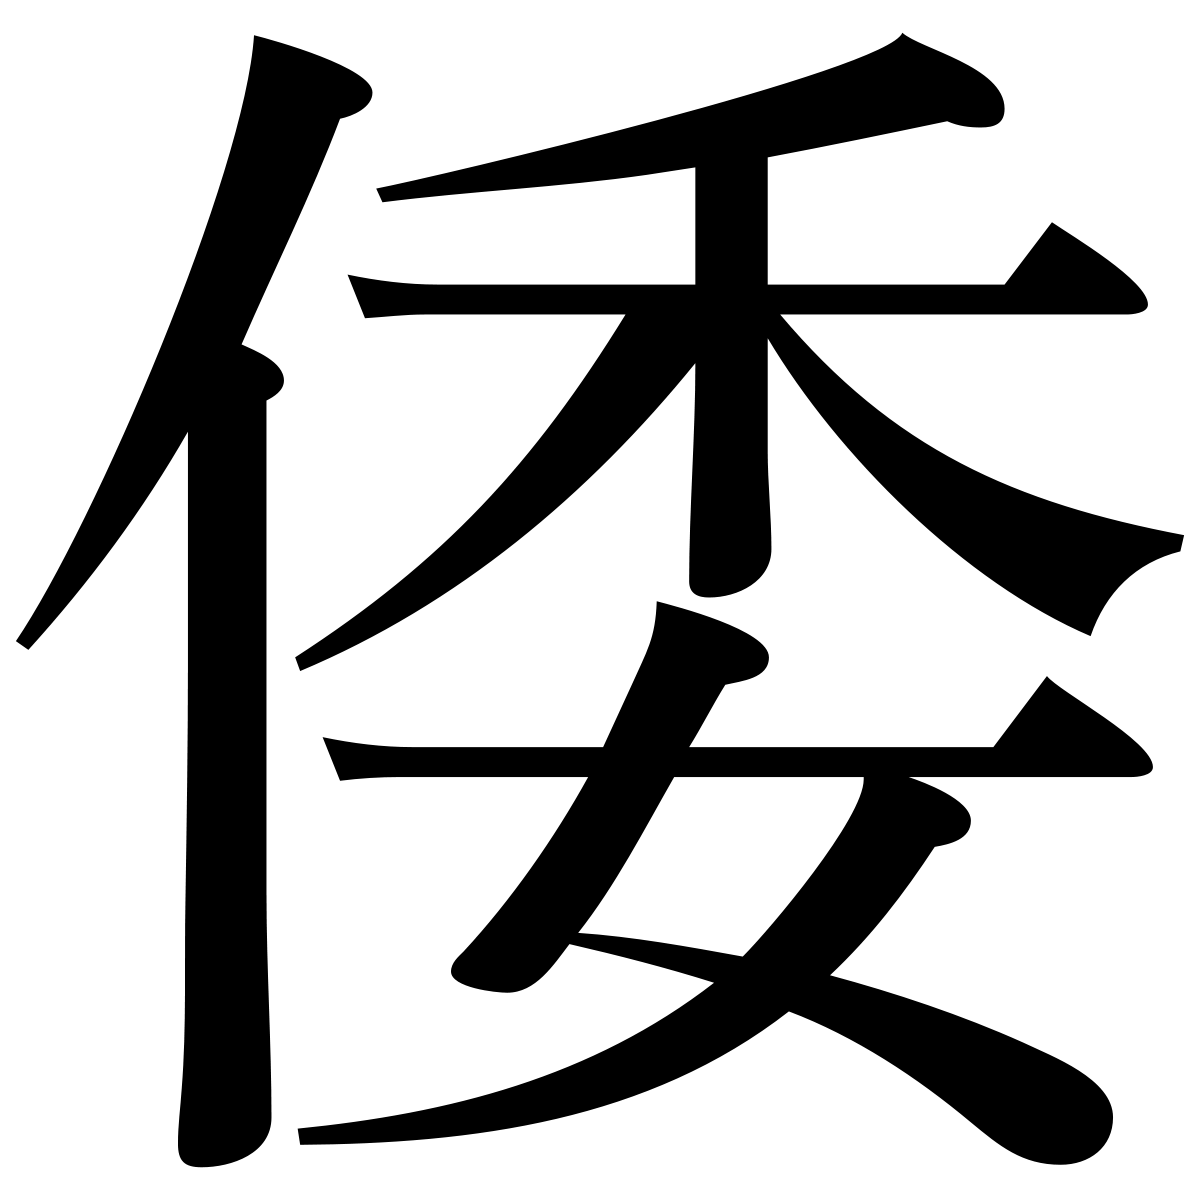 Японский кандзи иероглиф знак. Японский иероглиф Kanji. Иероглиф иероглиф Канджи. Китайский иероглиф кандзи. Система знаков у японцев 11 букв